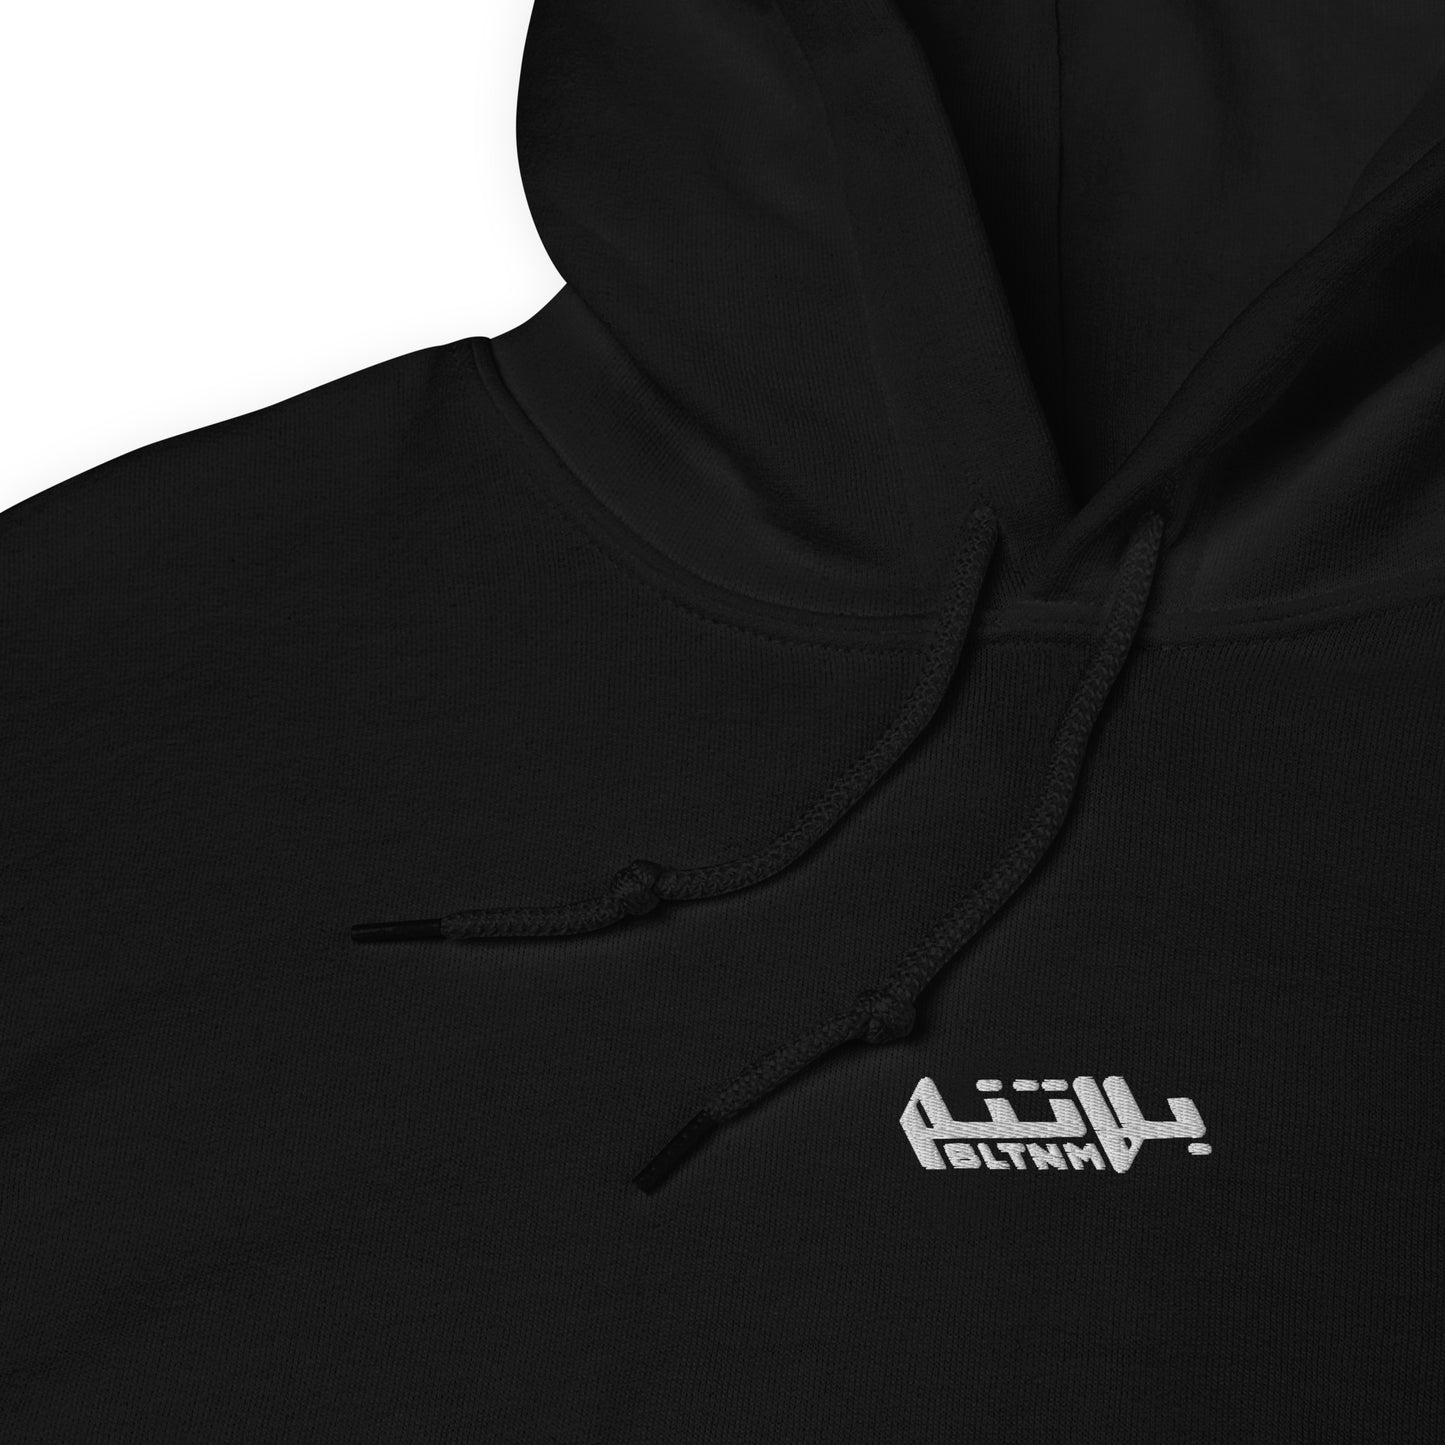 BLTNM™ Unisex hoodie